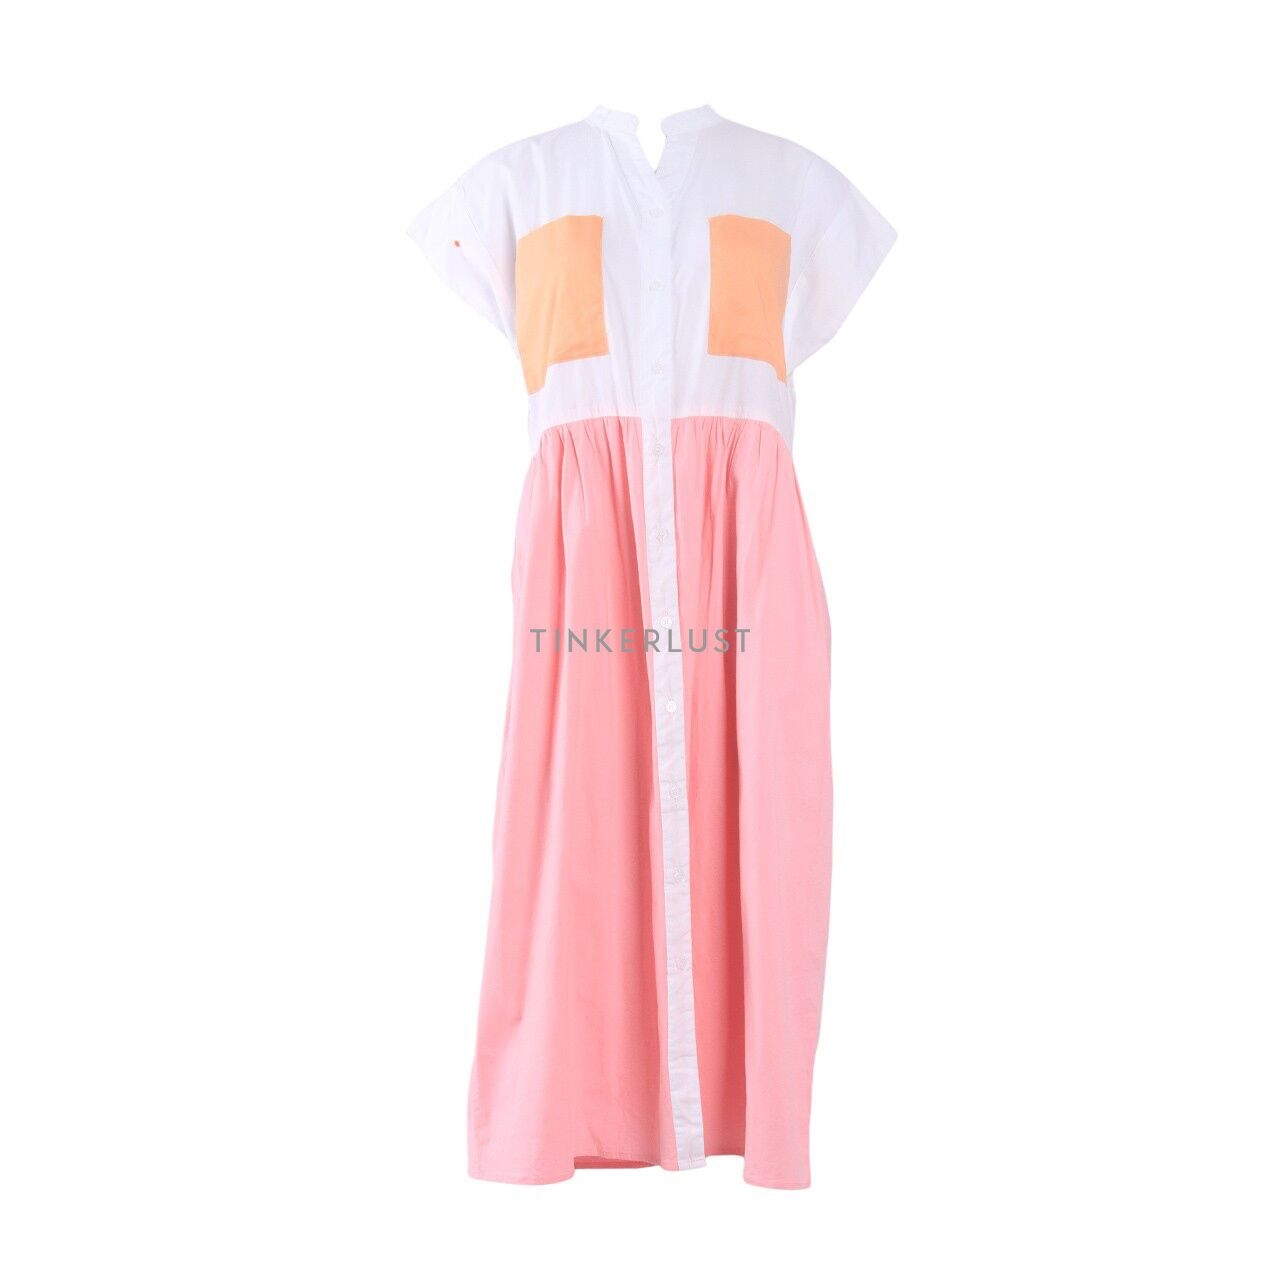 Cotton Ink Pink & White Midi Dress